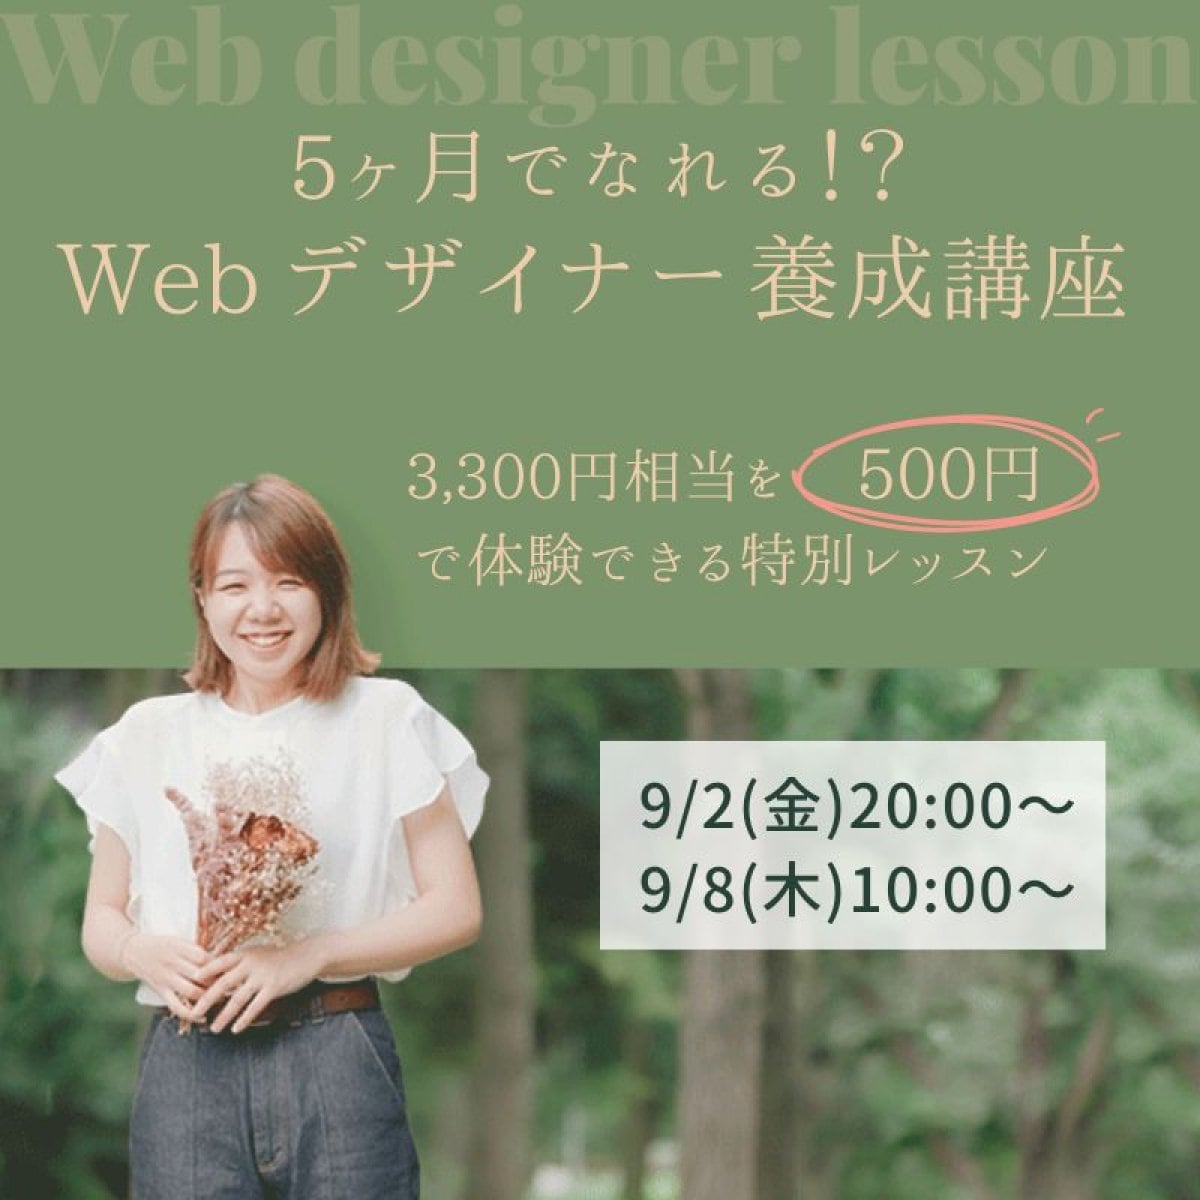 Webデザイナー養成講座165,000円の一部（3,300円相当）を500円で体験できる特別レッスン